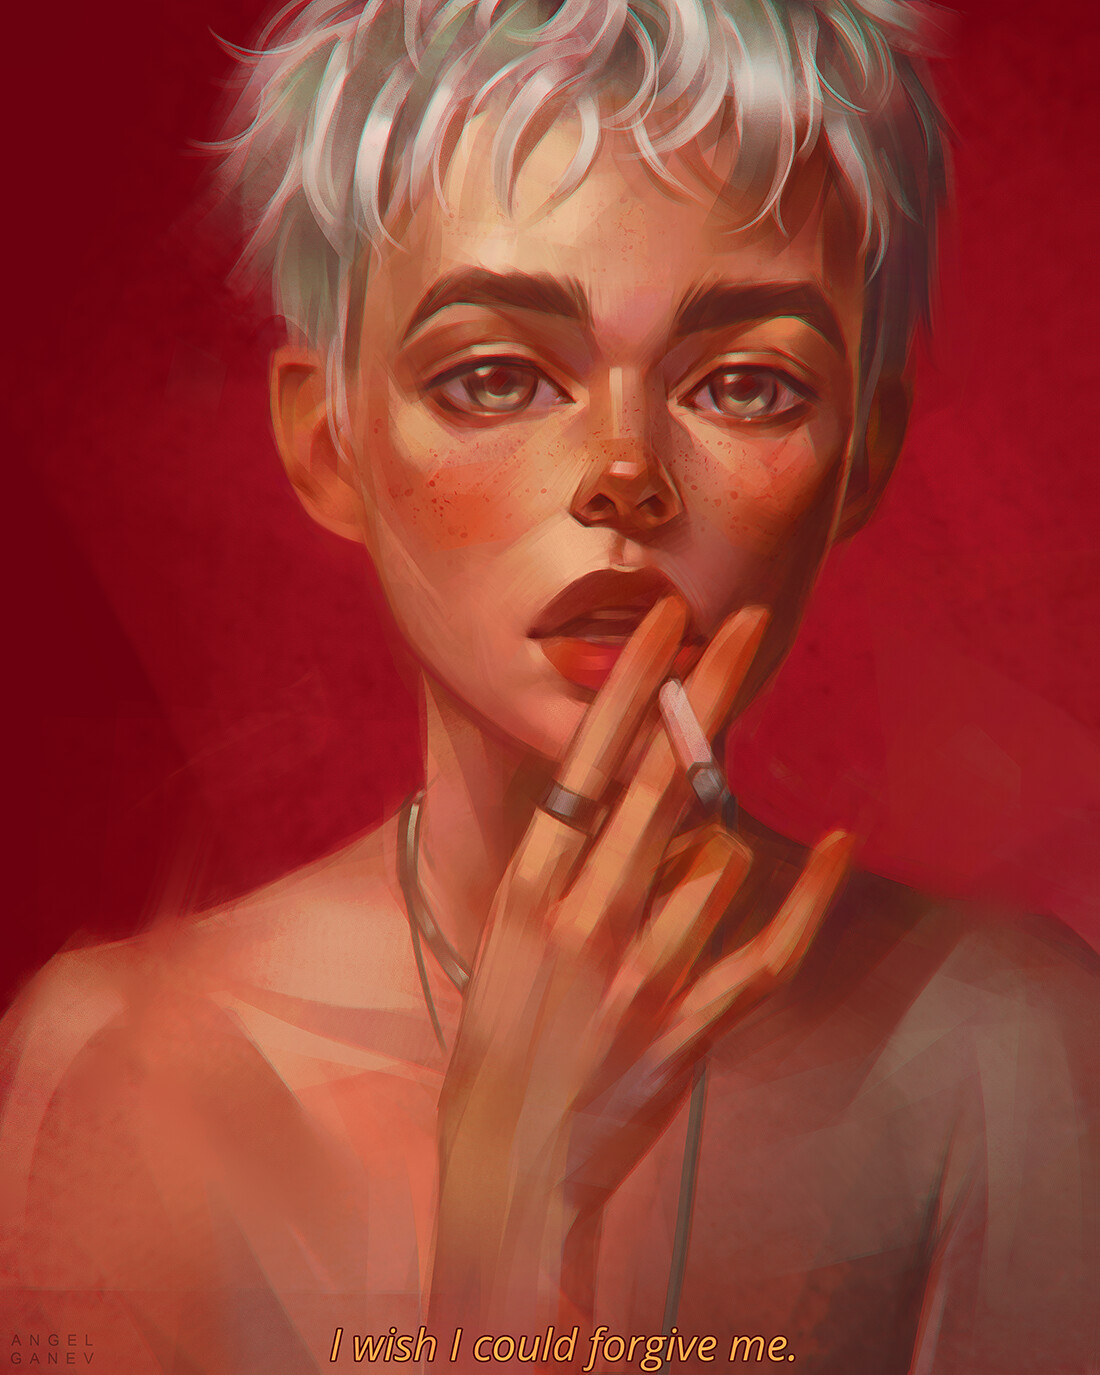 Angel Ganev Artwork Women Cigarettes Smoking Red Background Simple Background Face Portrait Short Ha 1100x1375